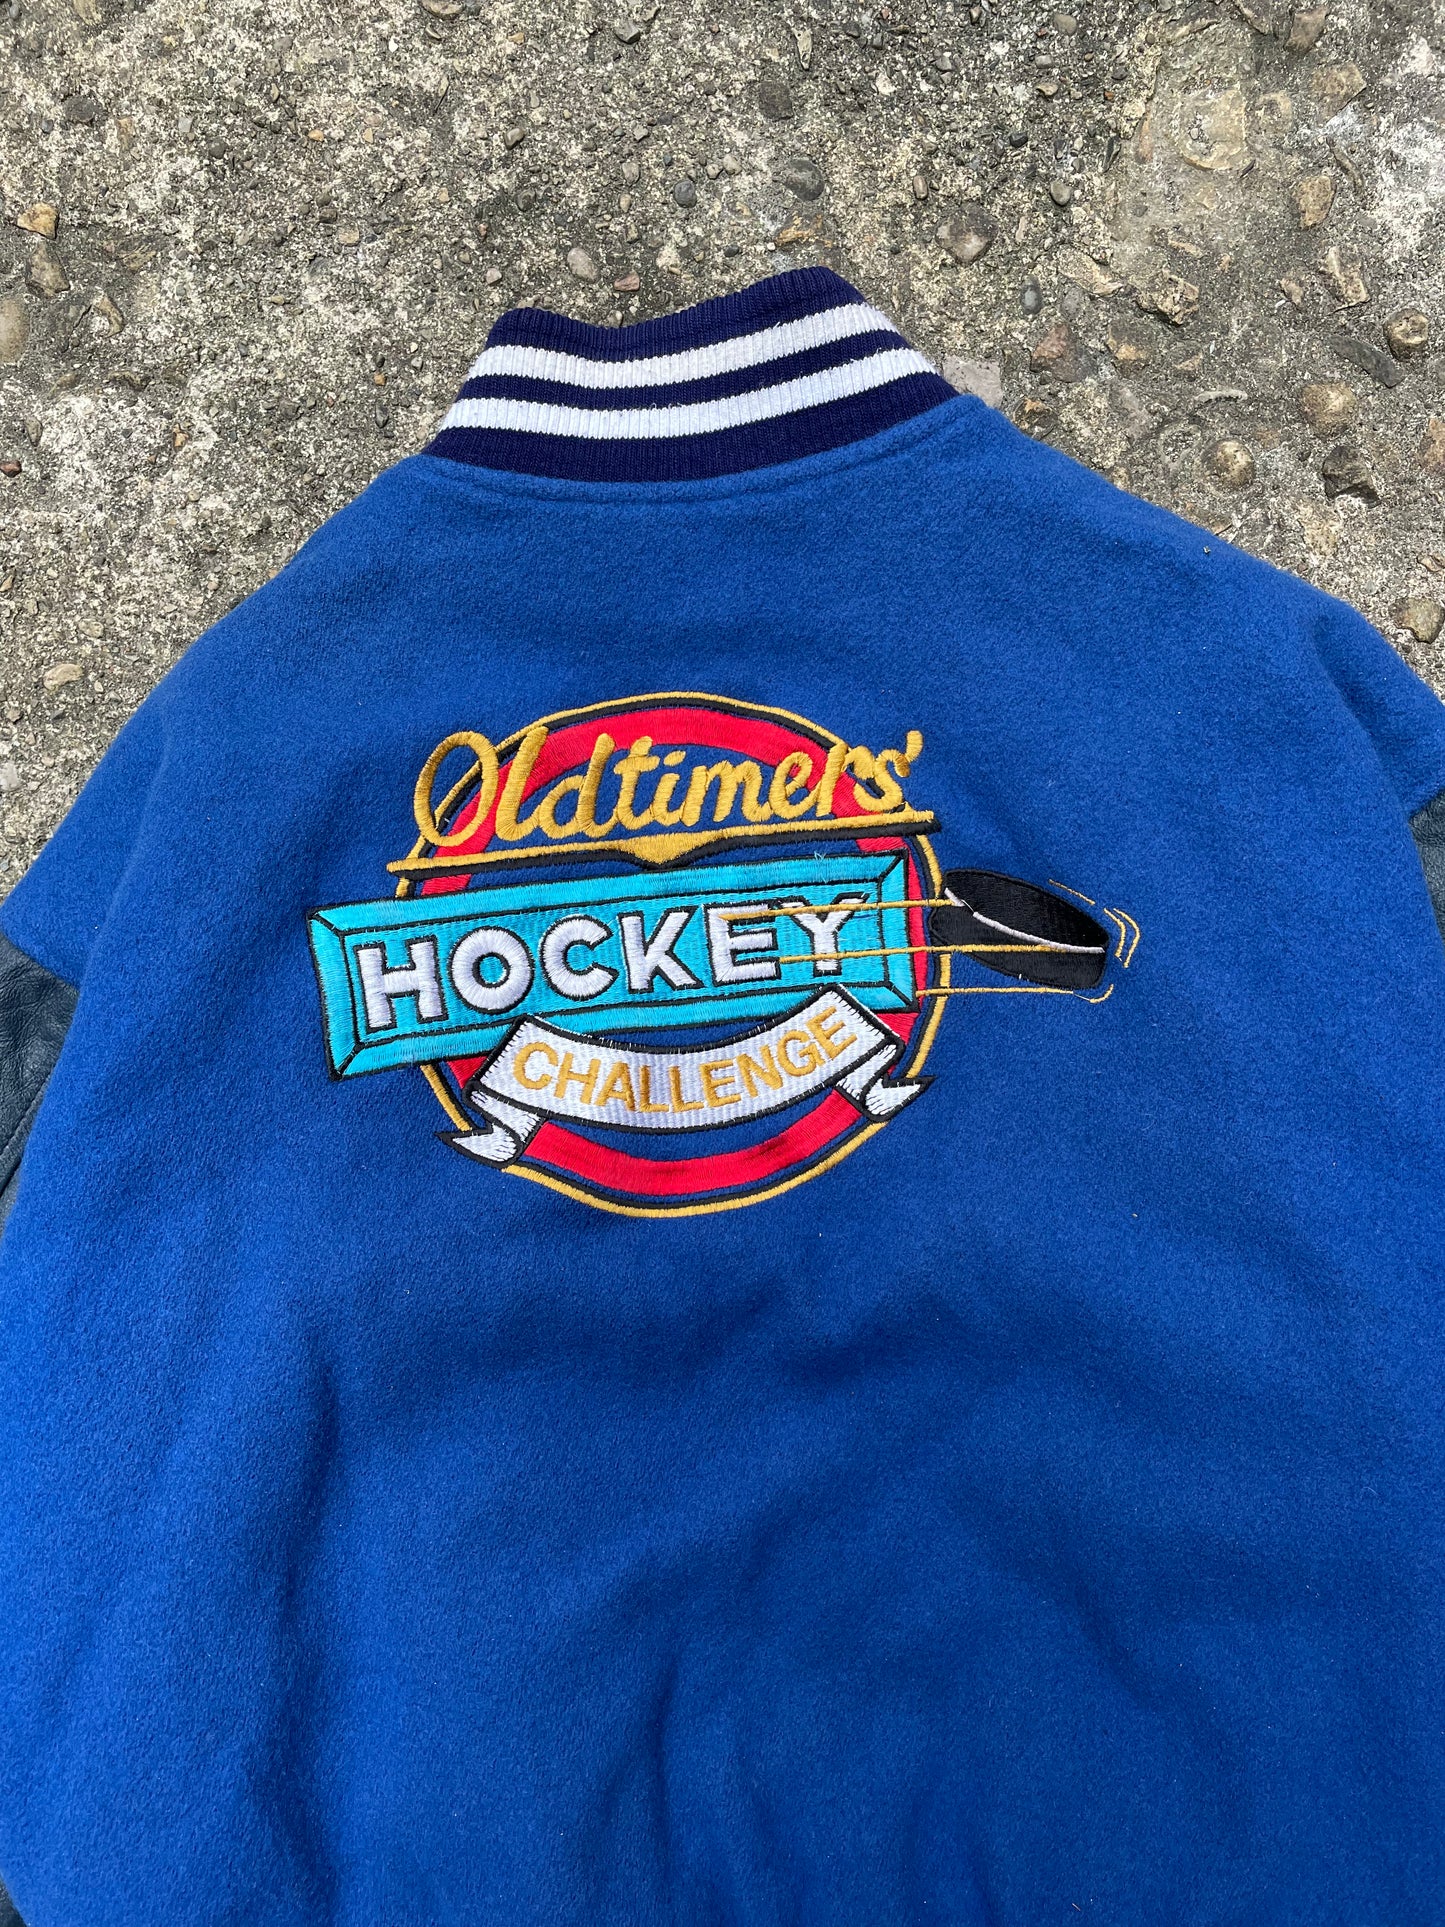 1980’s/1990’s Oldtimers Hockey Varsity Jacket - L